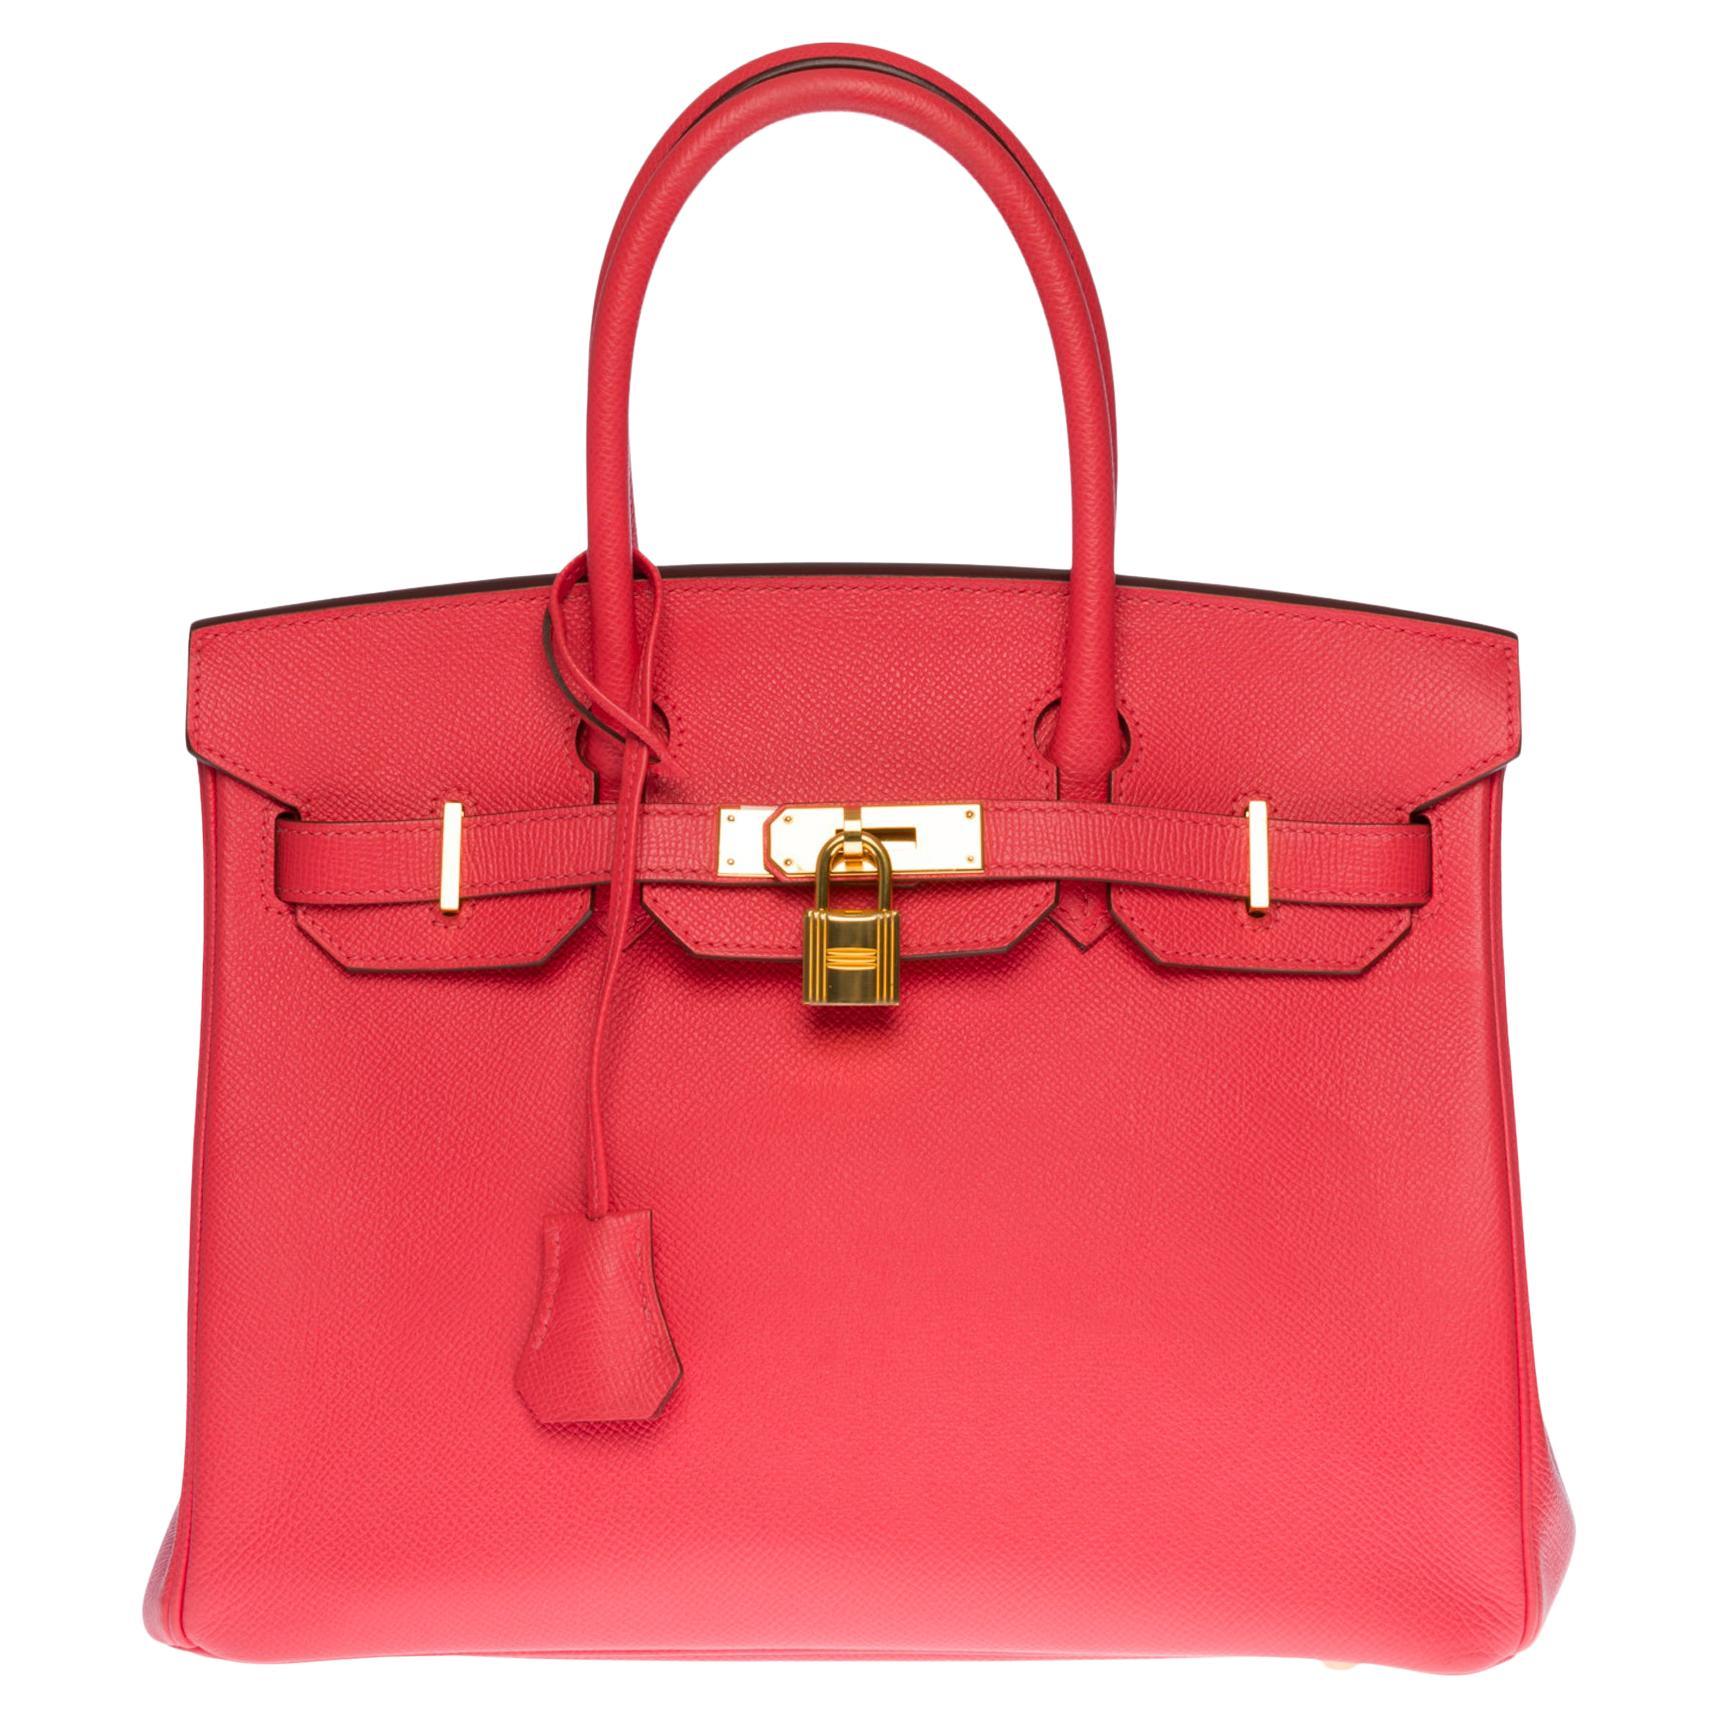 Almost New - Hermès Birkin 30 handbag in Rose Jaïpur Epsom leather, GHW